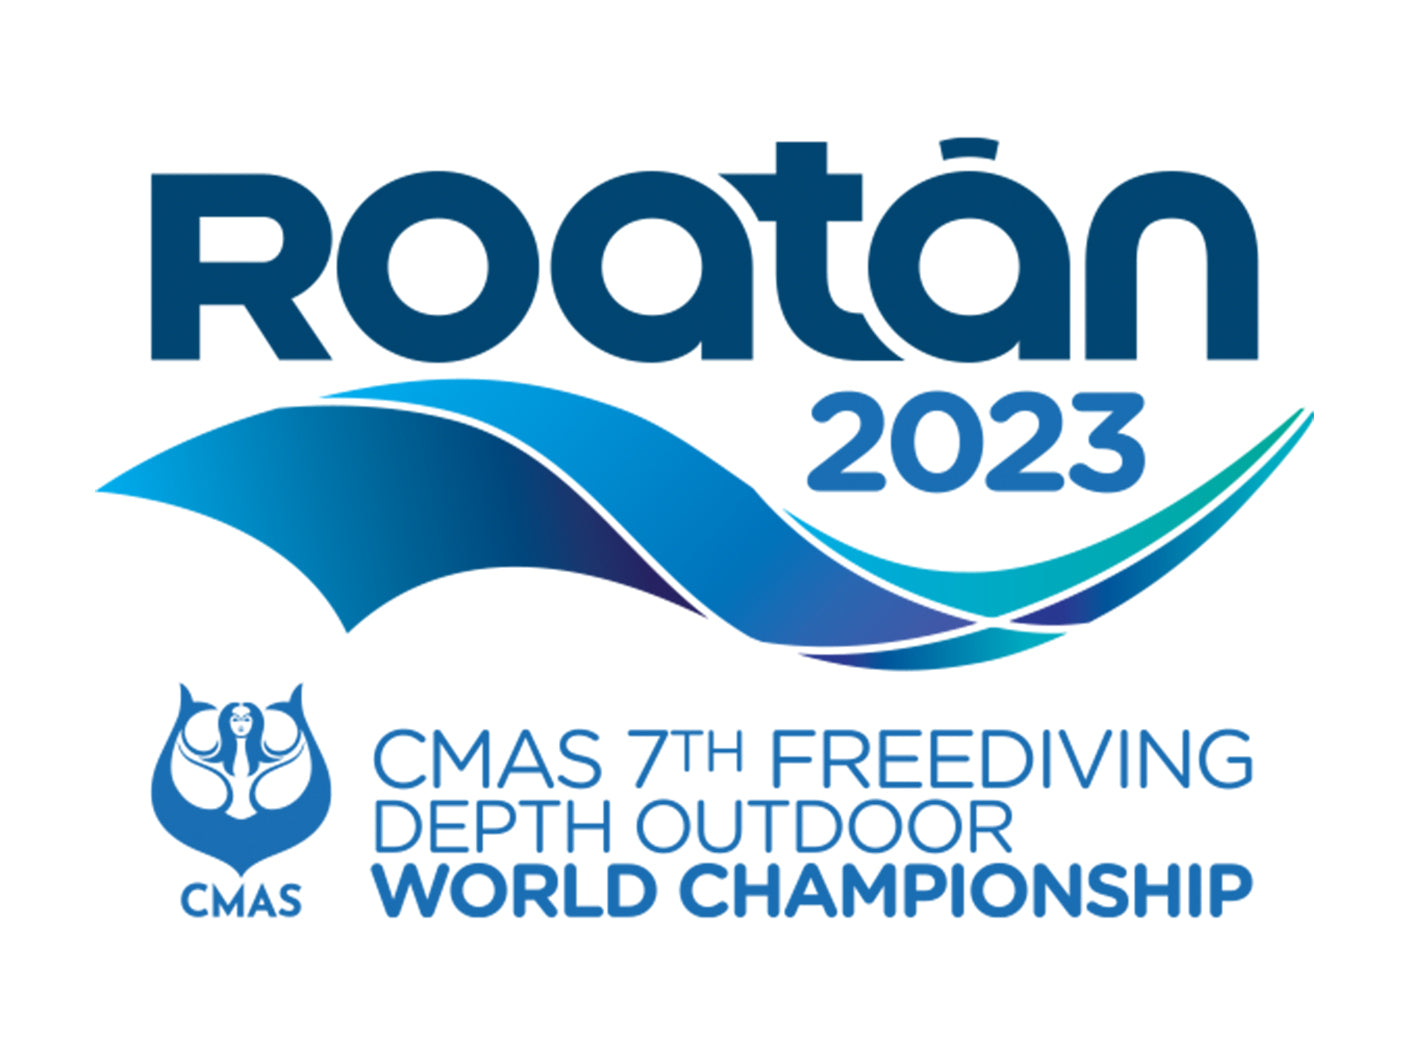 CMAS 7th Freediving Depth World Championship 2023